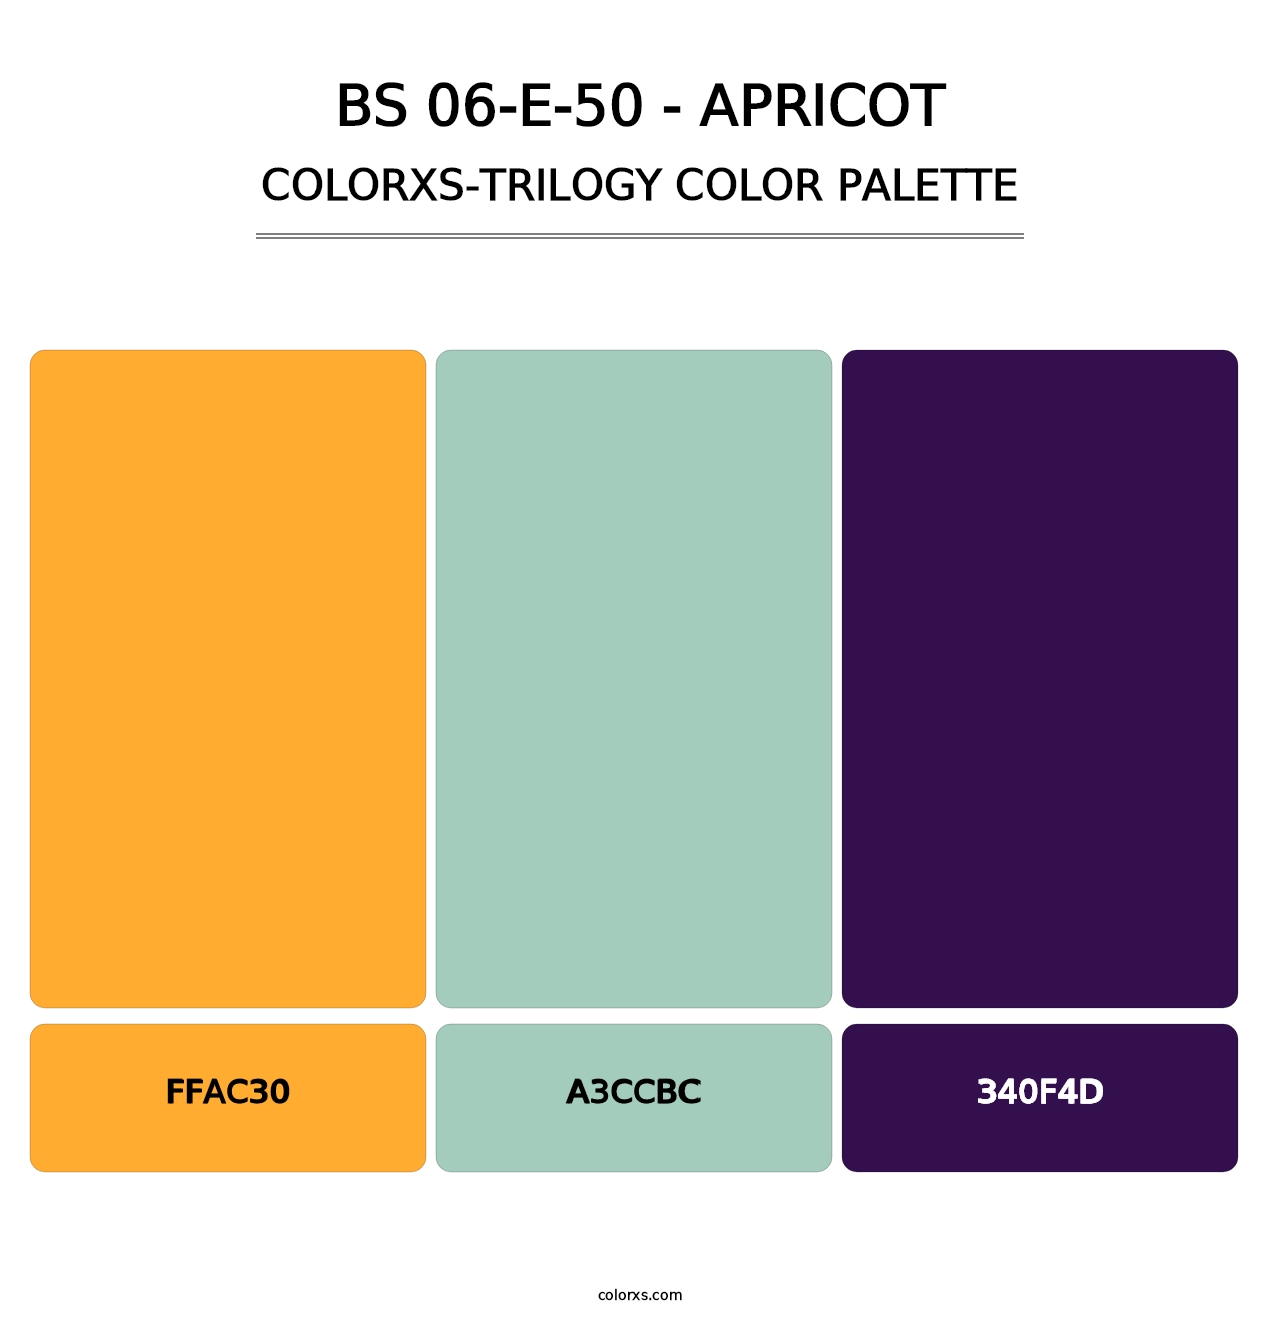 BS 06-E-50 - Apricot - Colorxs Trilogy Palette